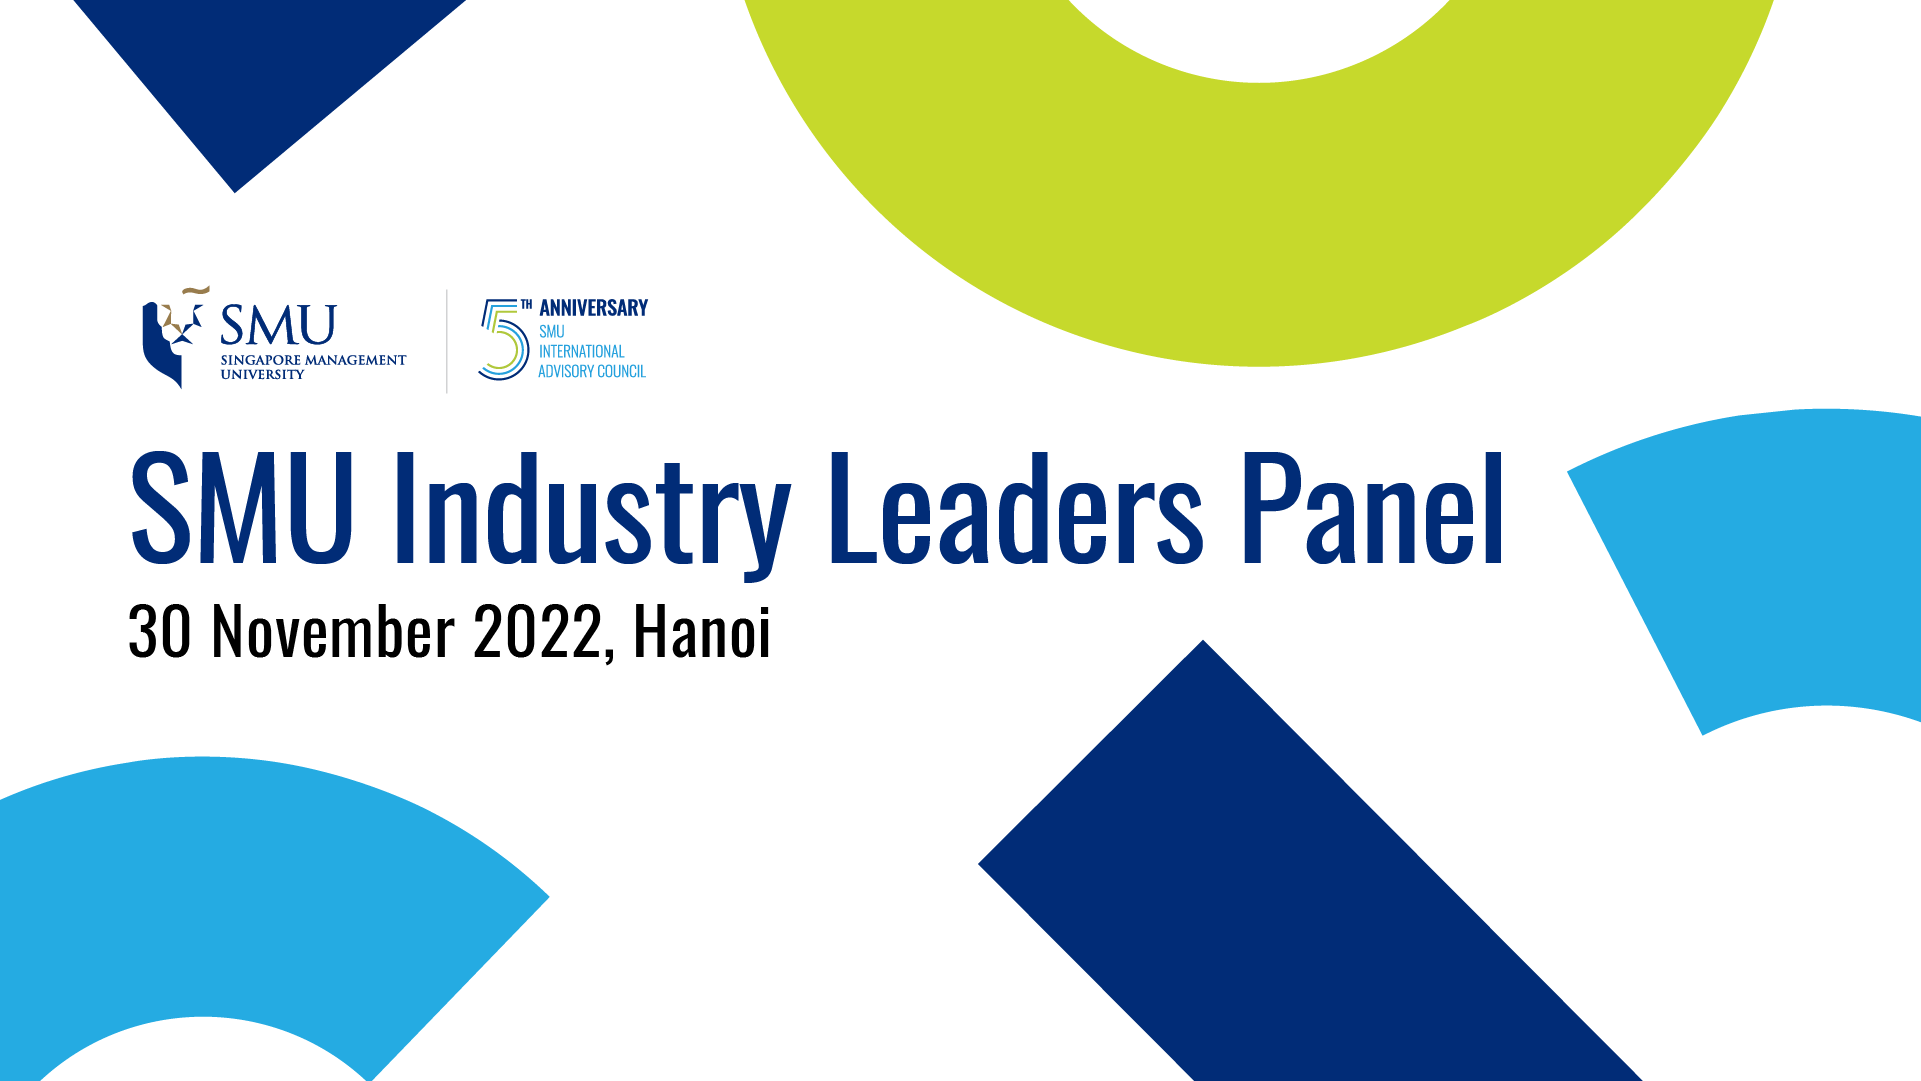 SMU Industry Leaders Panel 2022, Hanoi